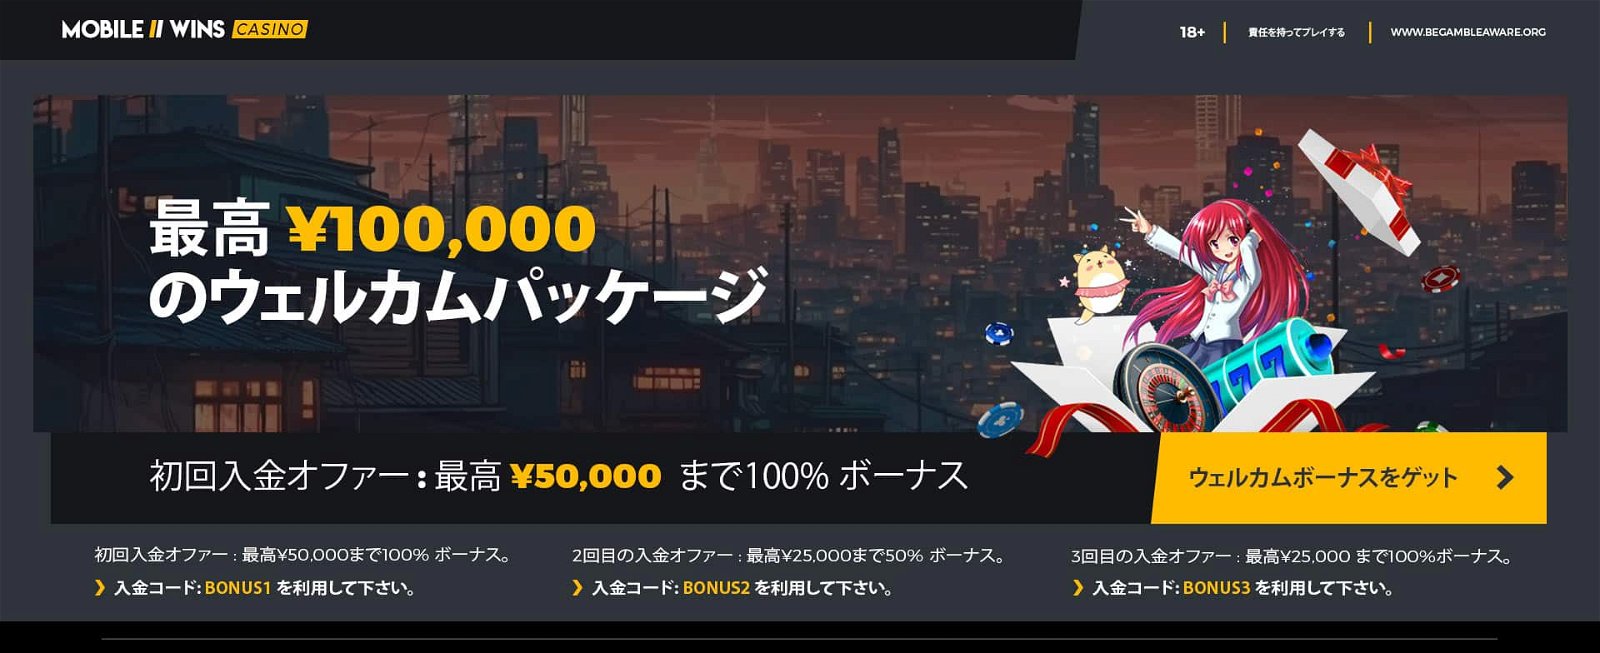 Casino | JP | Welcome Offer | 100K